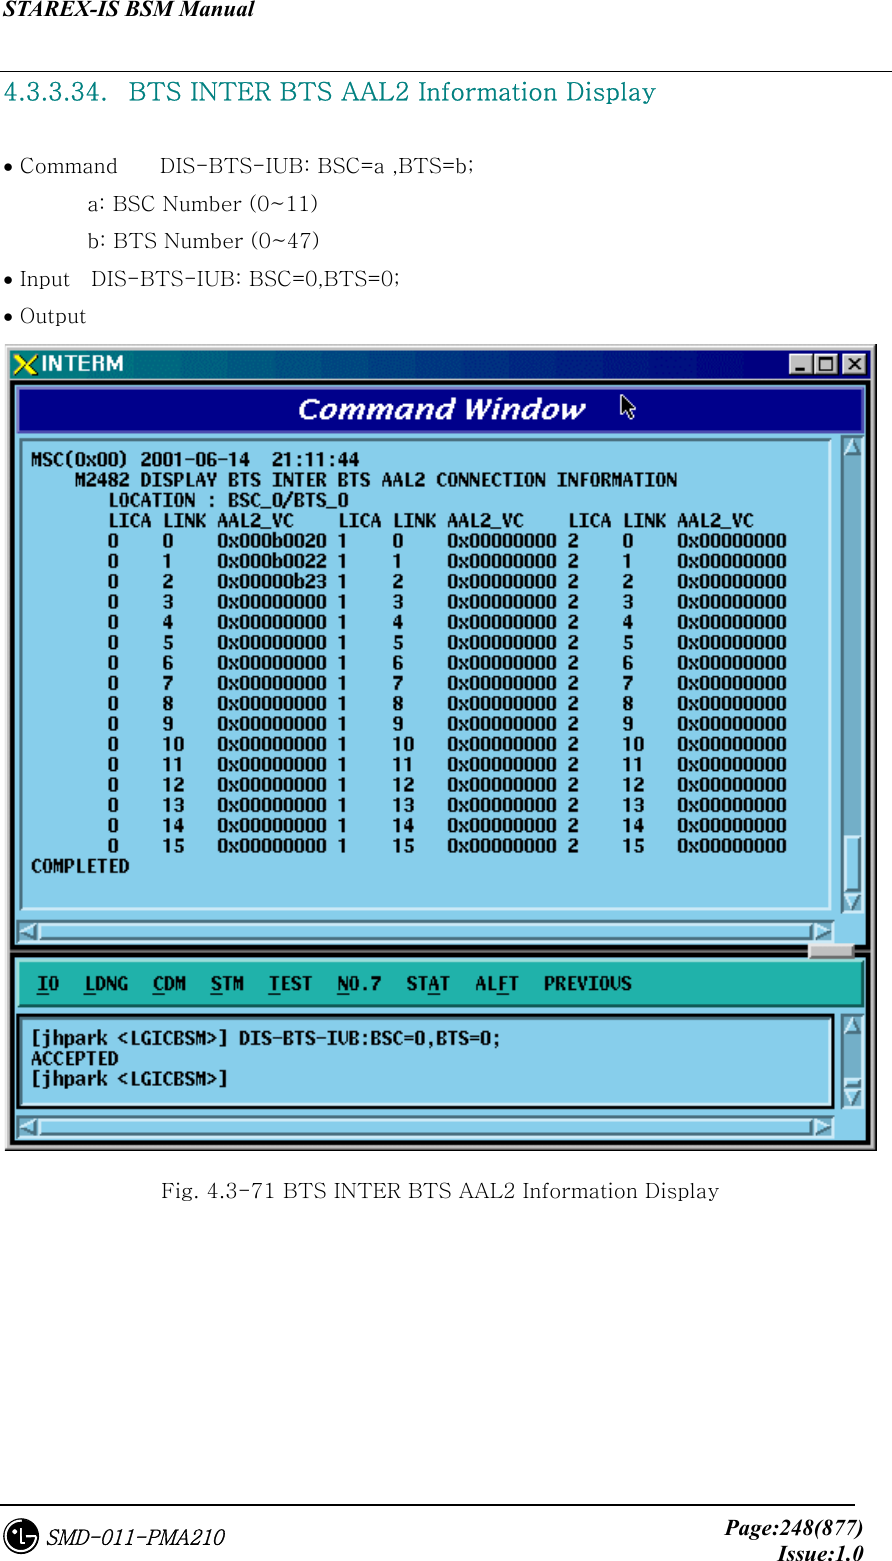 STAREX-IS BSM Manual     Page:248(877)Issue:1.0SMD-011-PMA210 4.3.3.34.   BTS INTER BTS AAL2 Information Display  • Command    DIS-BTS-IUB: BSC=a ,BTS=b;         a: BSC Number (0~11)         b: BTS Number (0~47) • Input    DIS-BTS-IUB: BSC=0,BTS=0; • Output  Fig. 4.3-71 BTS INTER BTS AAL2 Information Display 